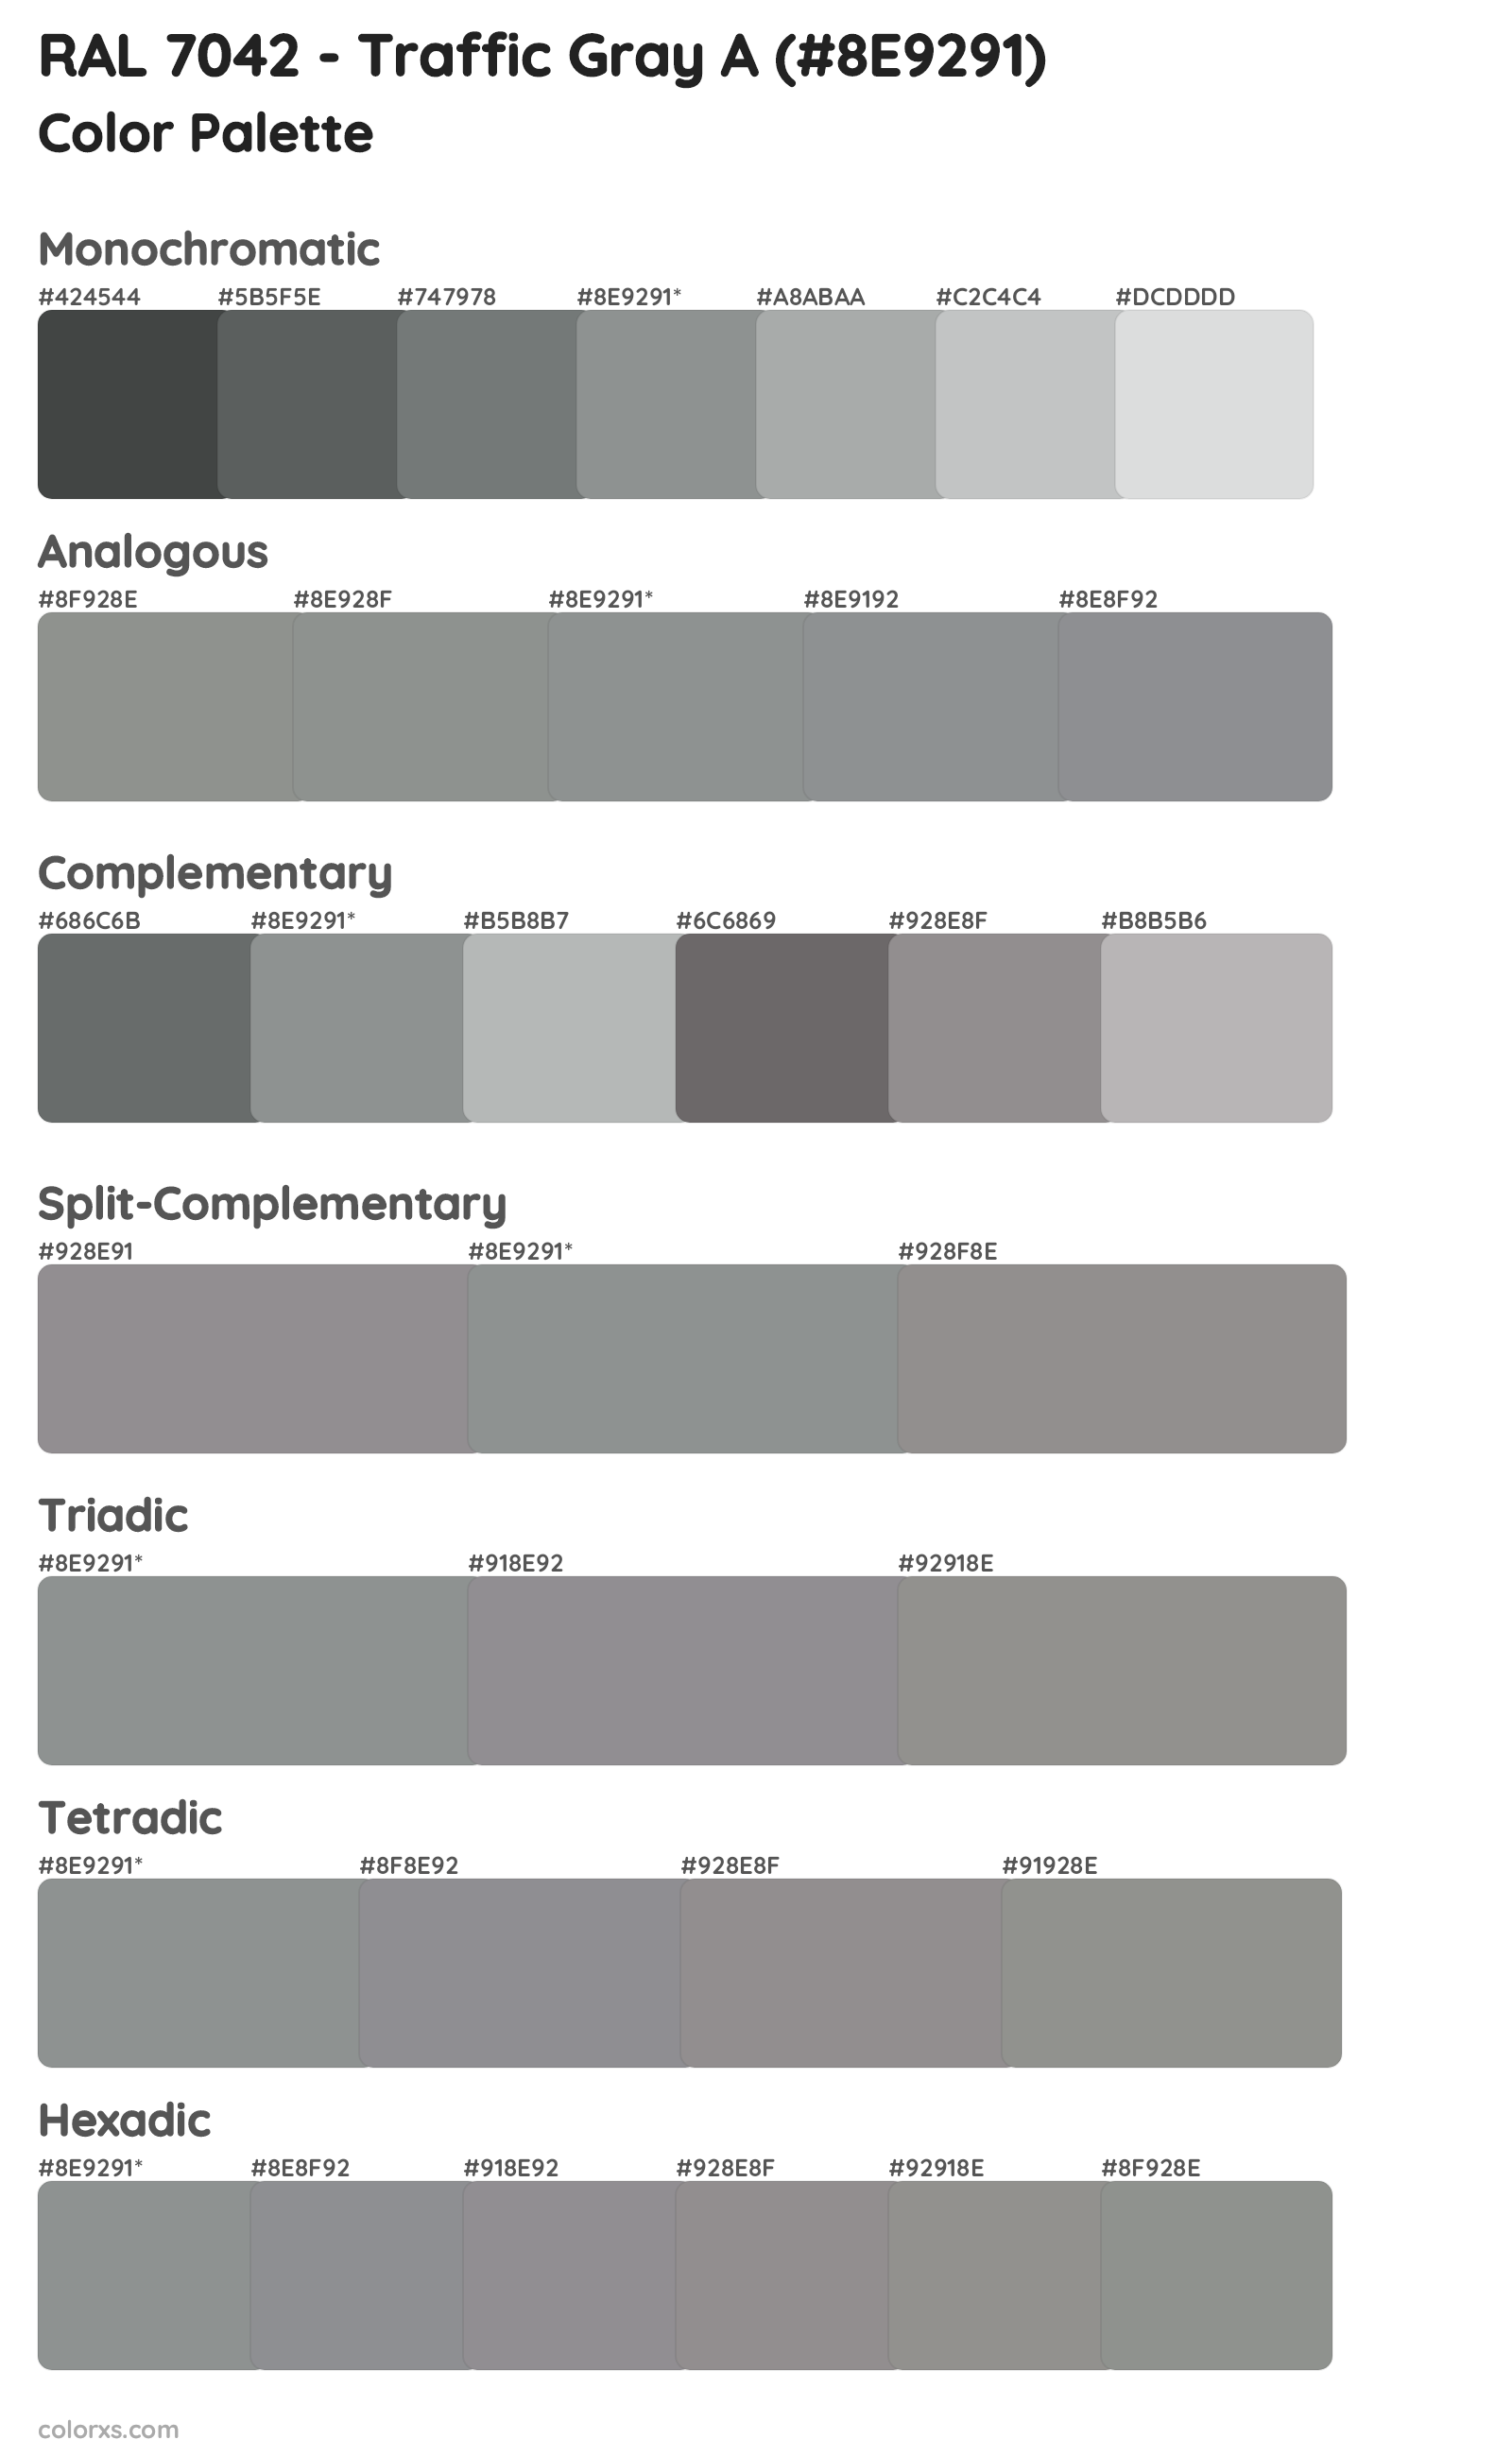 RAL 7042 - Traffic Gray A Color Scheme Palettes